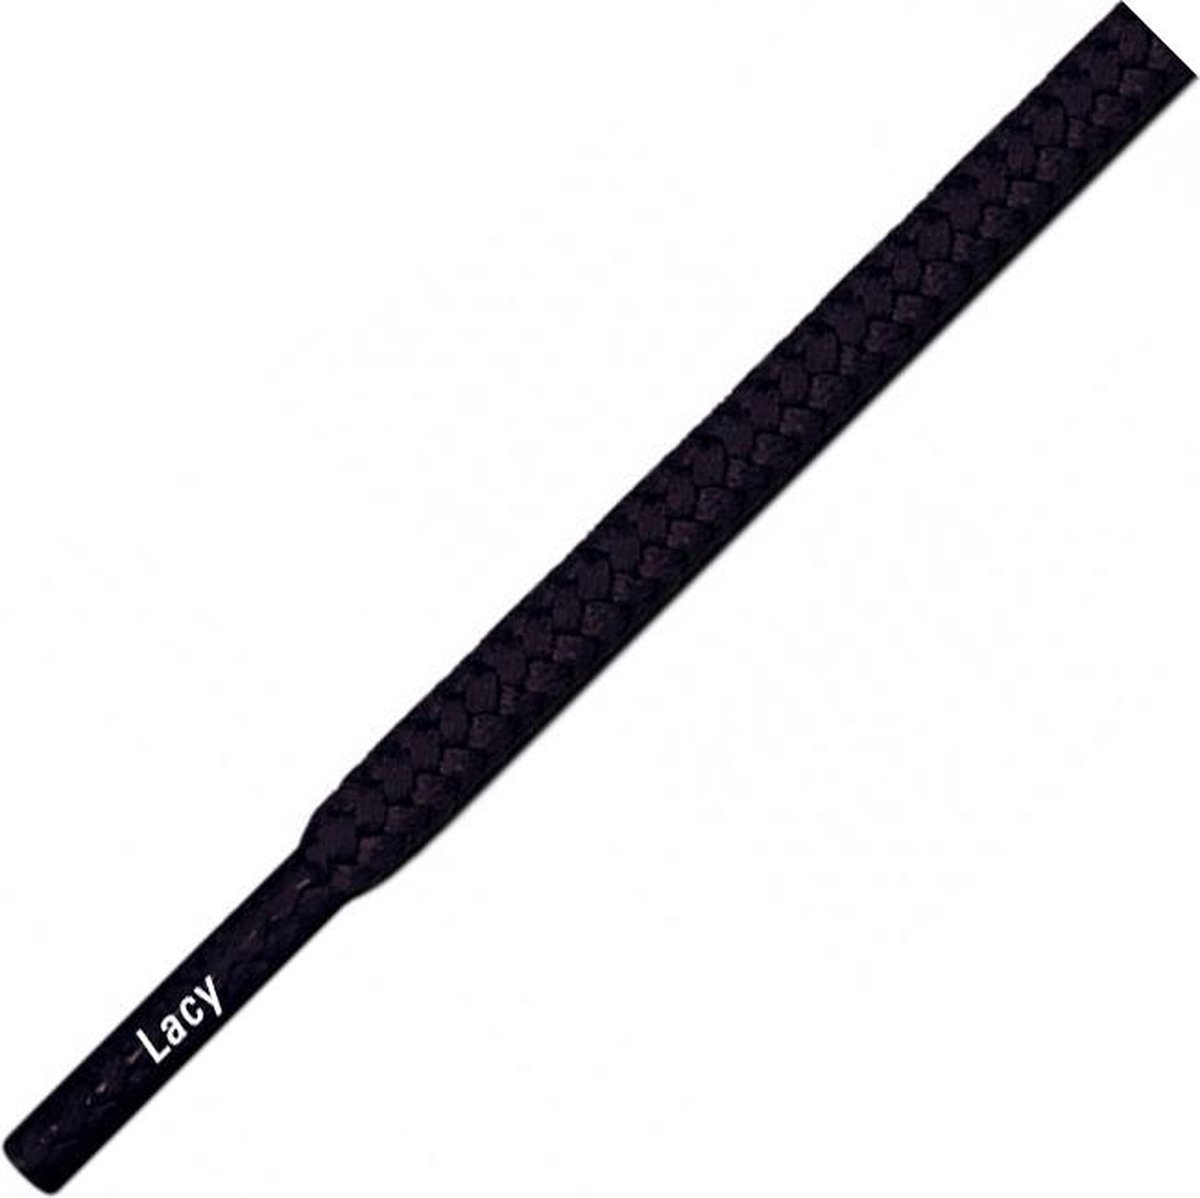 Schoenveters -lacy- Hikies - zwart-120 cm lang en 5mm dik rond